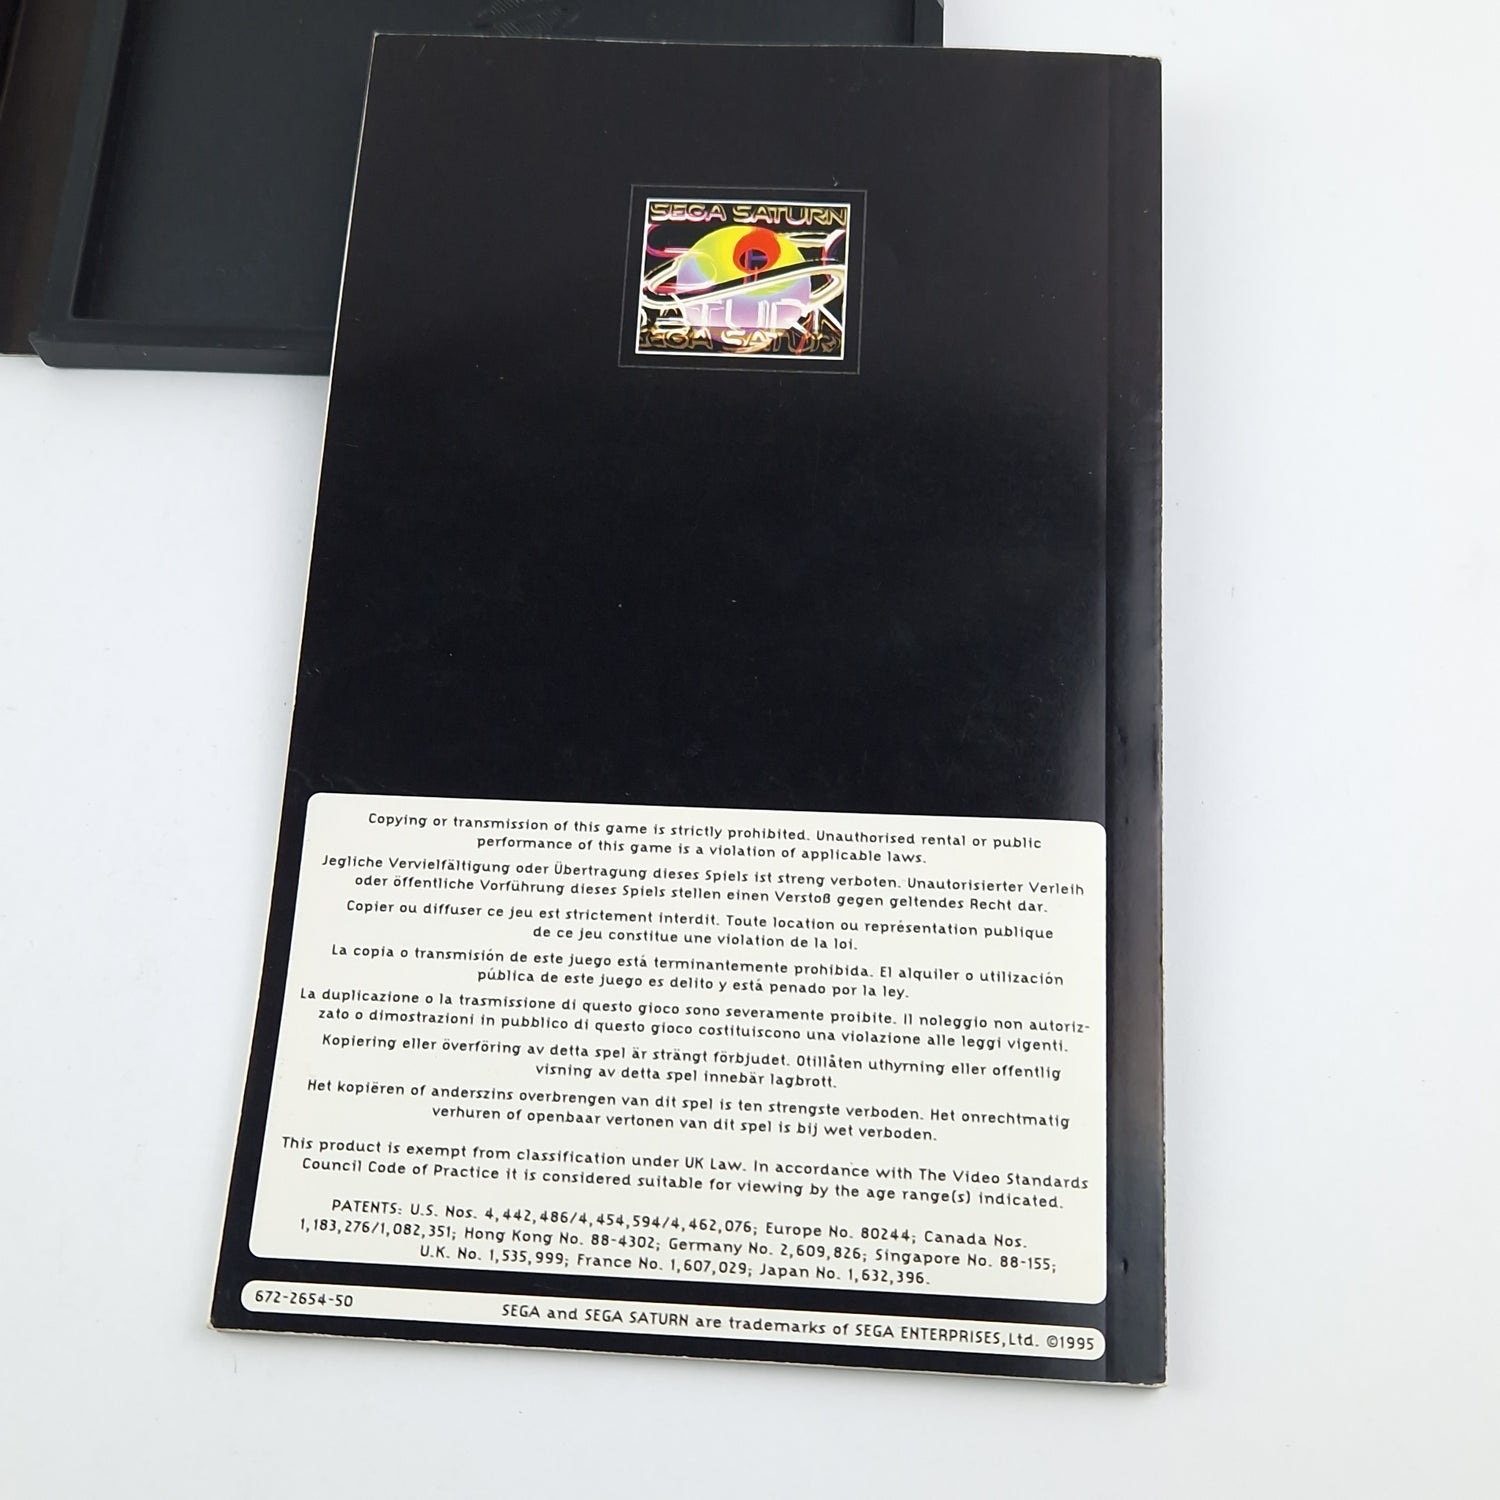 Sega Saturn Game: Shinobi X - CD Instructions OVP cib / PAL Disk System